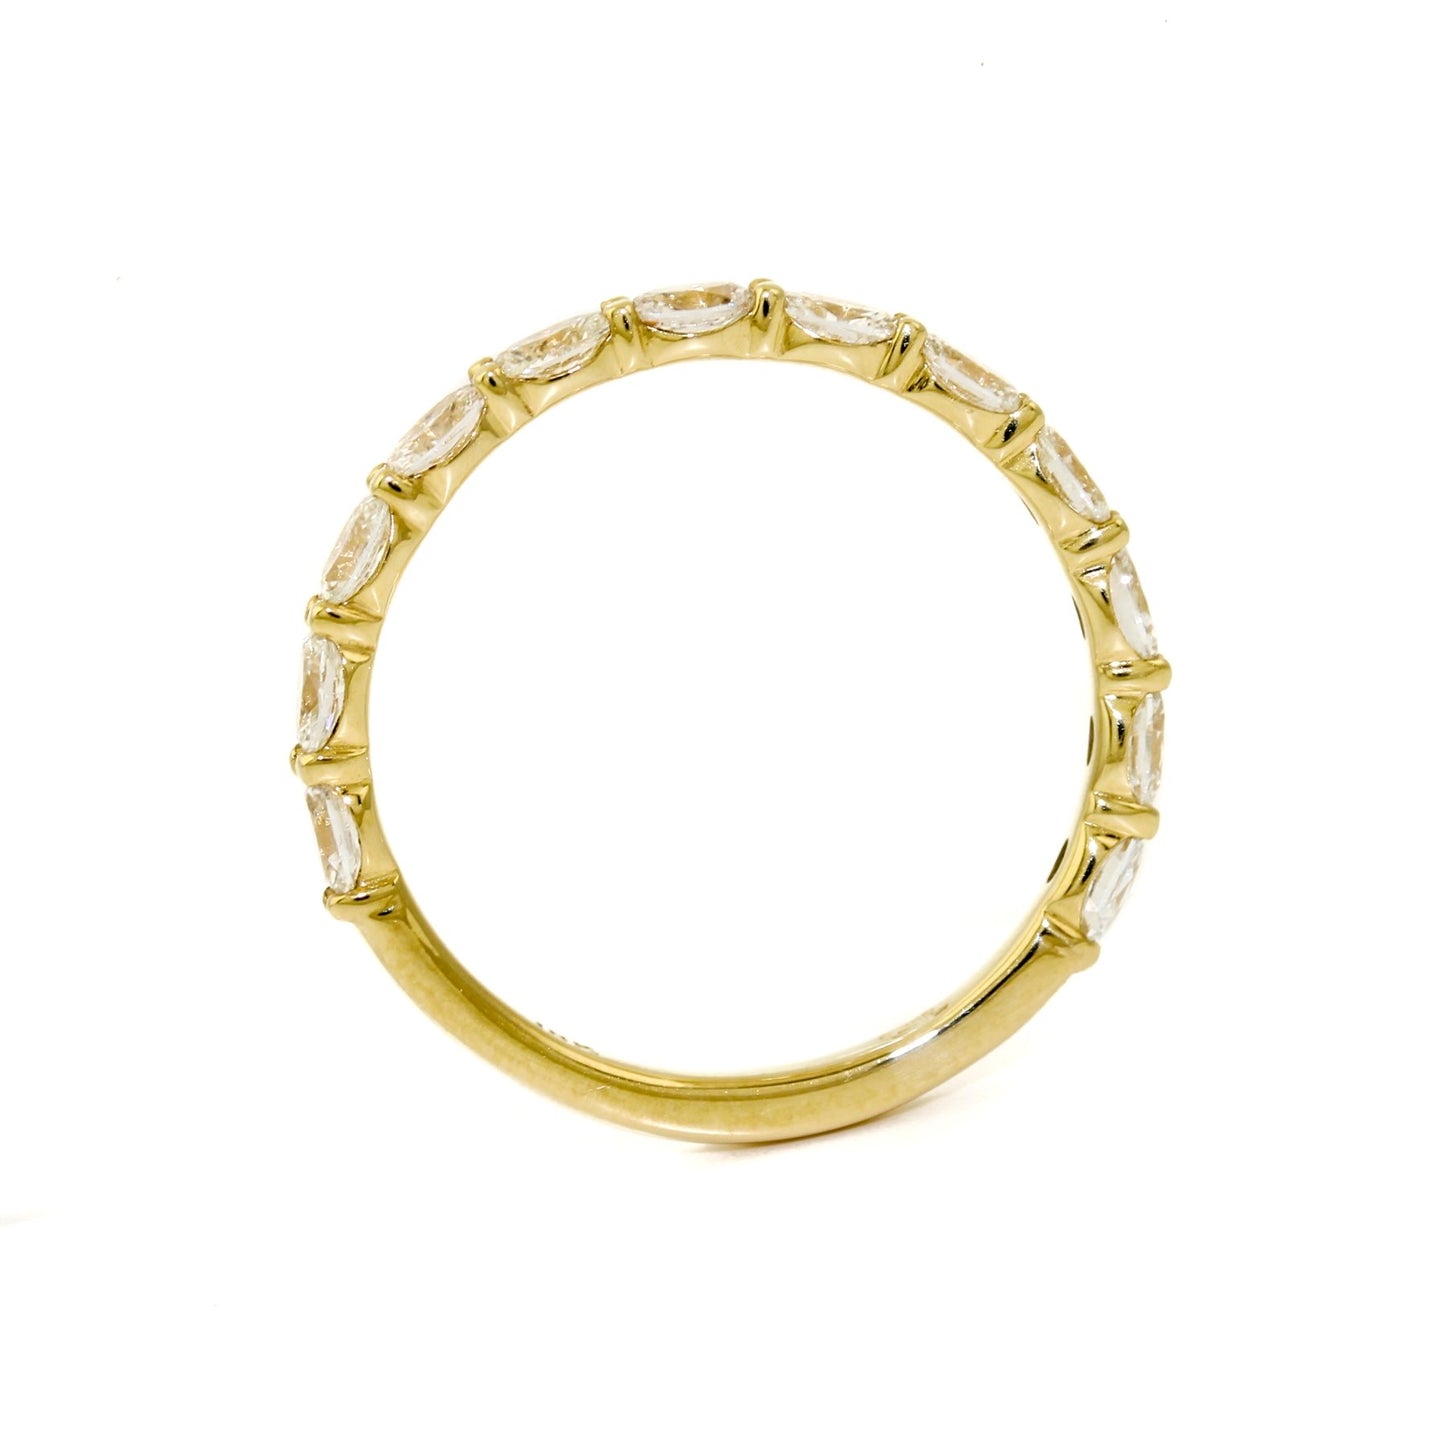 Oval Cut Diamond Eternity Ring - Kingdom Jewelry